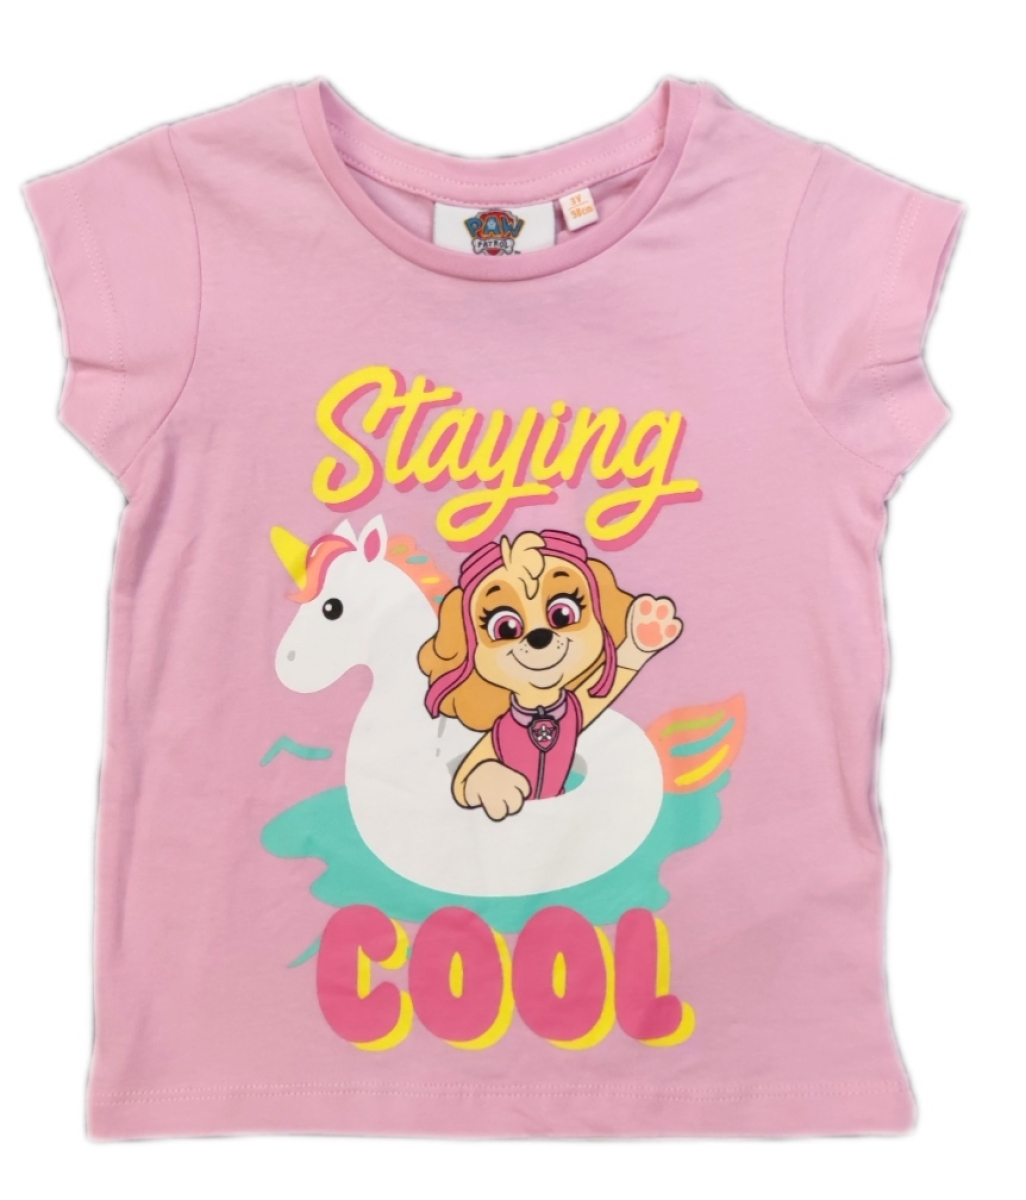 PAW Patrol T-Shirt Rosa "Cool" mit Skye